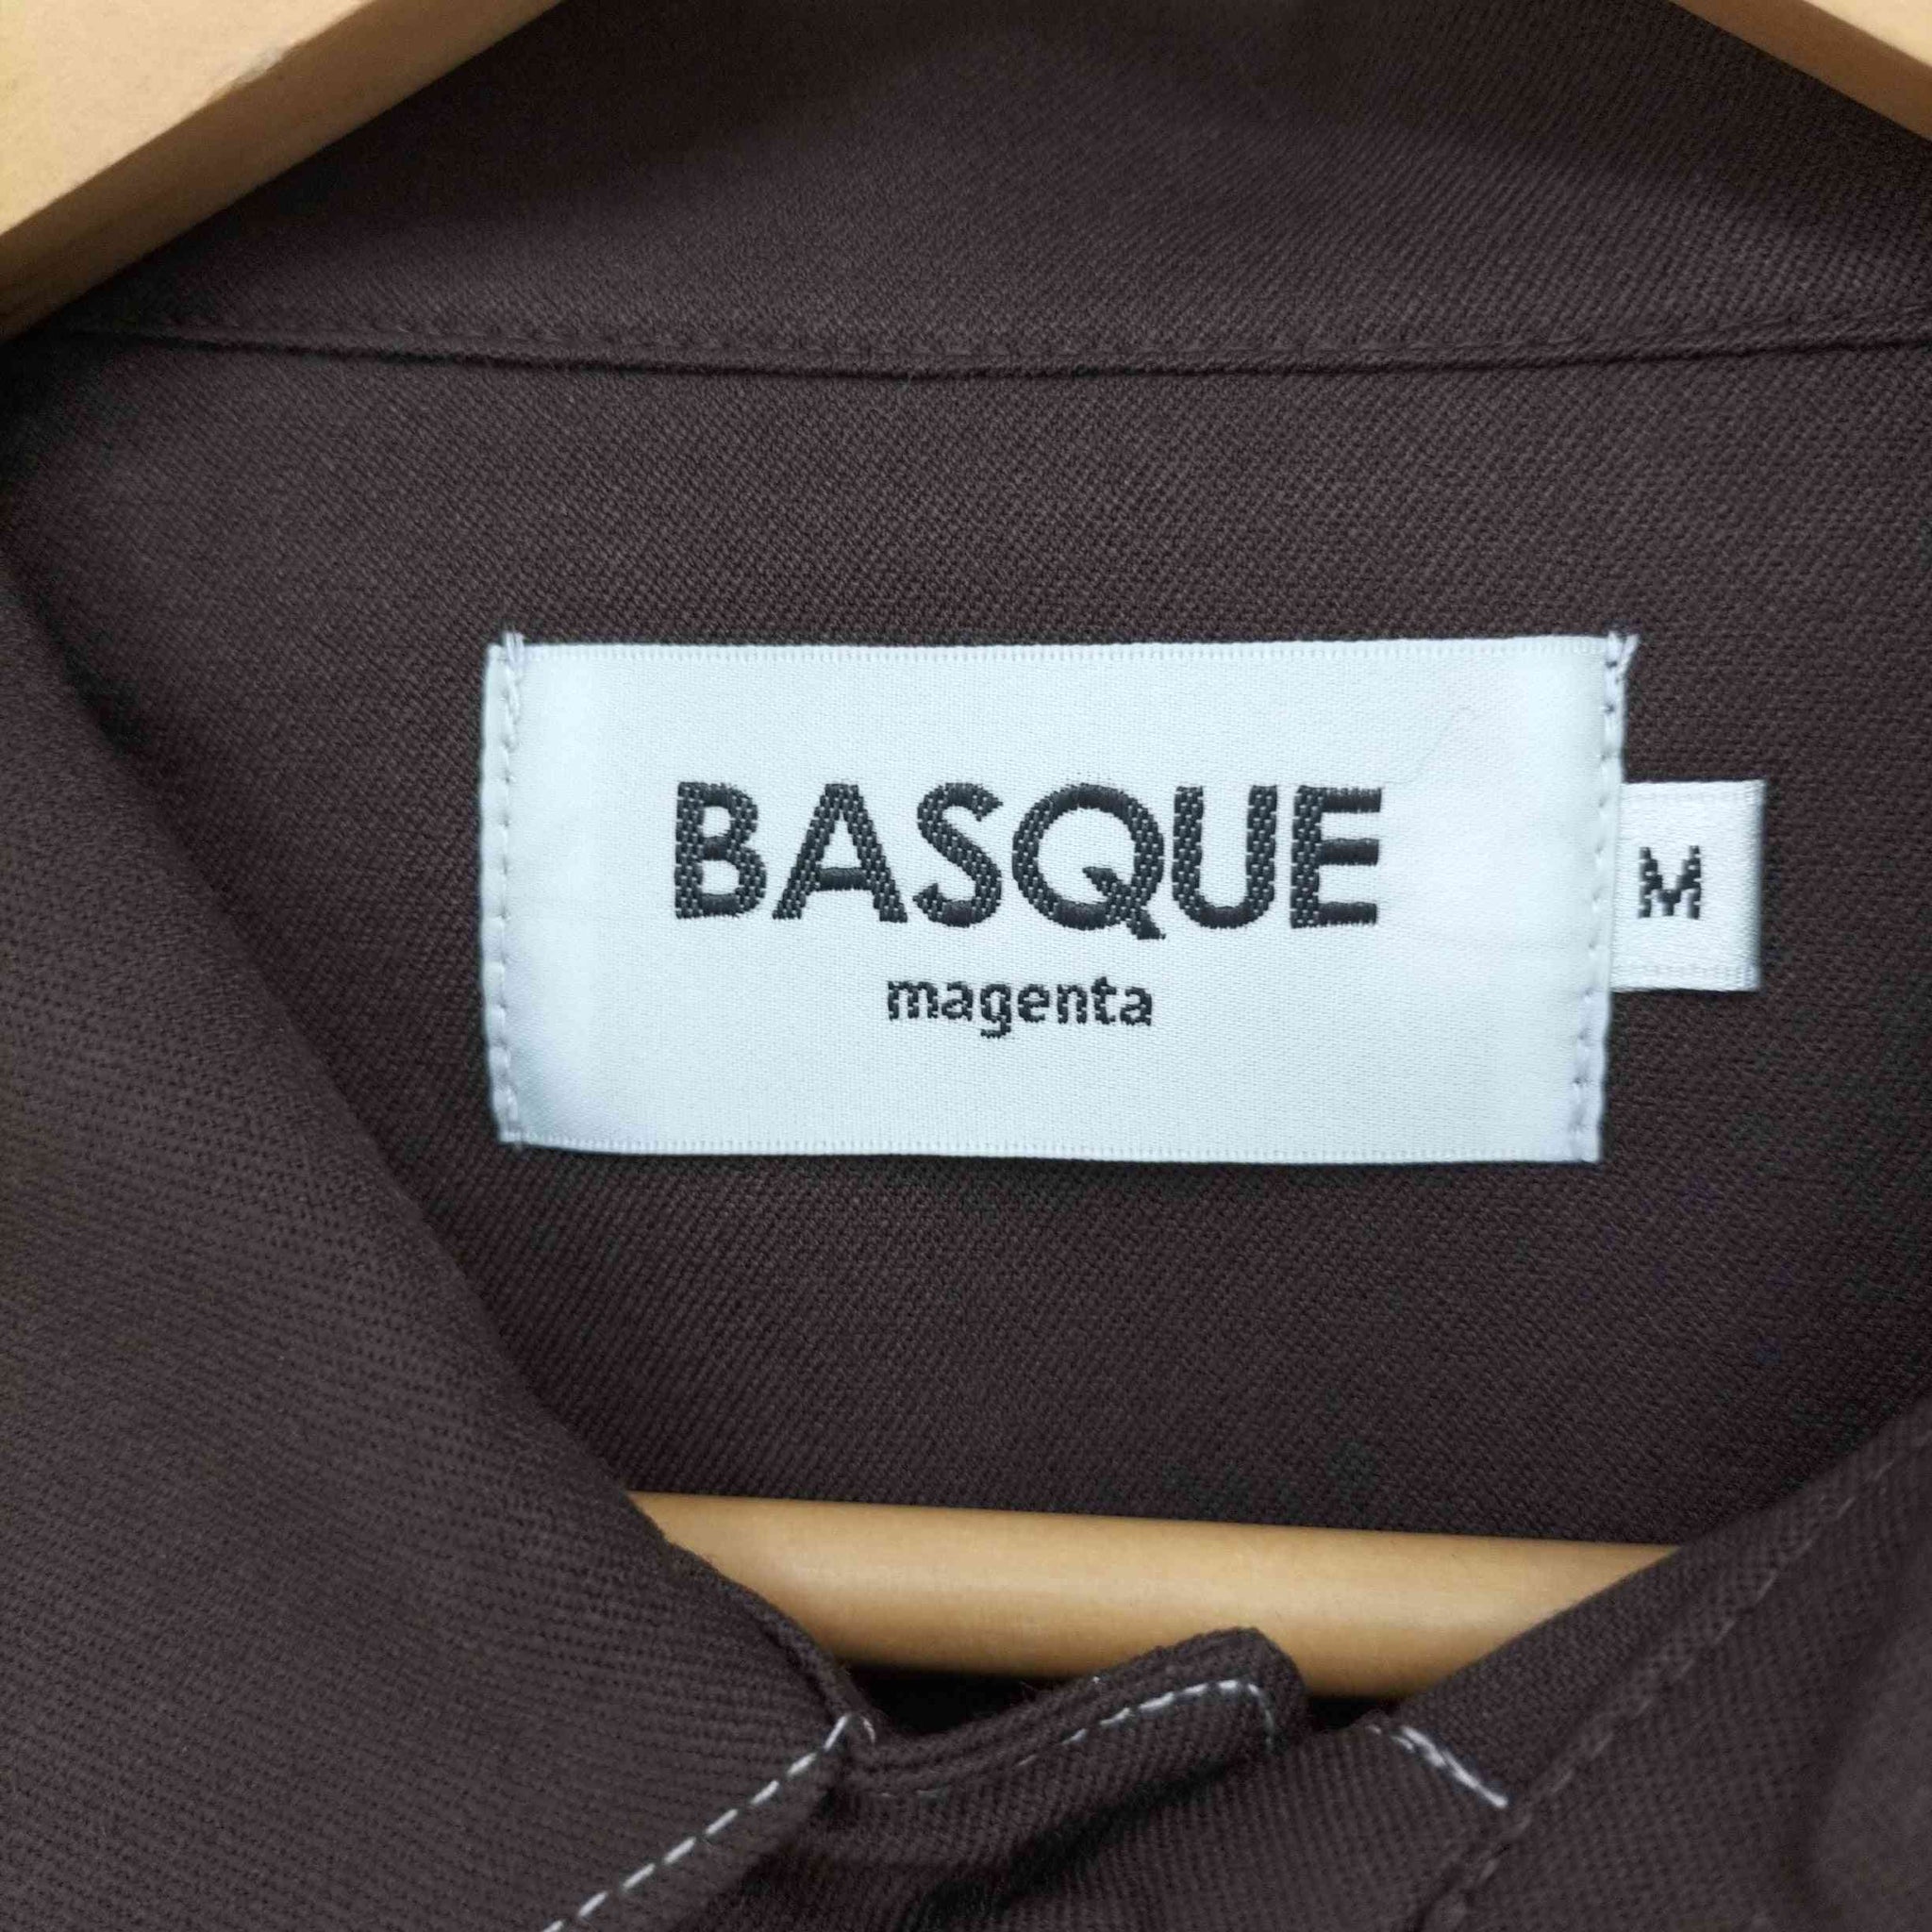 BASQUE magenta(バスクマゼンタ)T/R ストレッチ オーバーサイズ